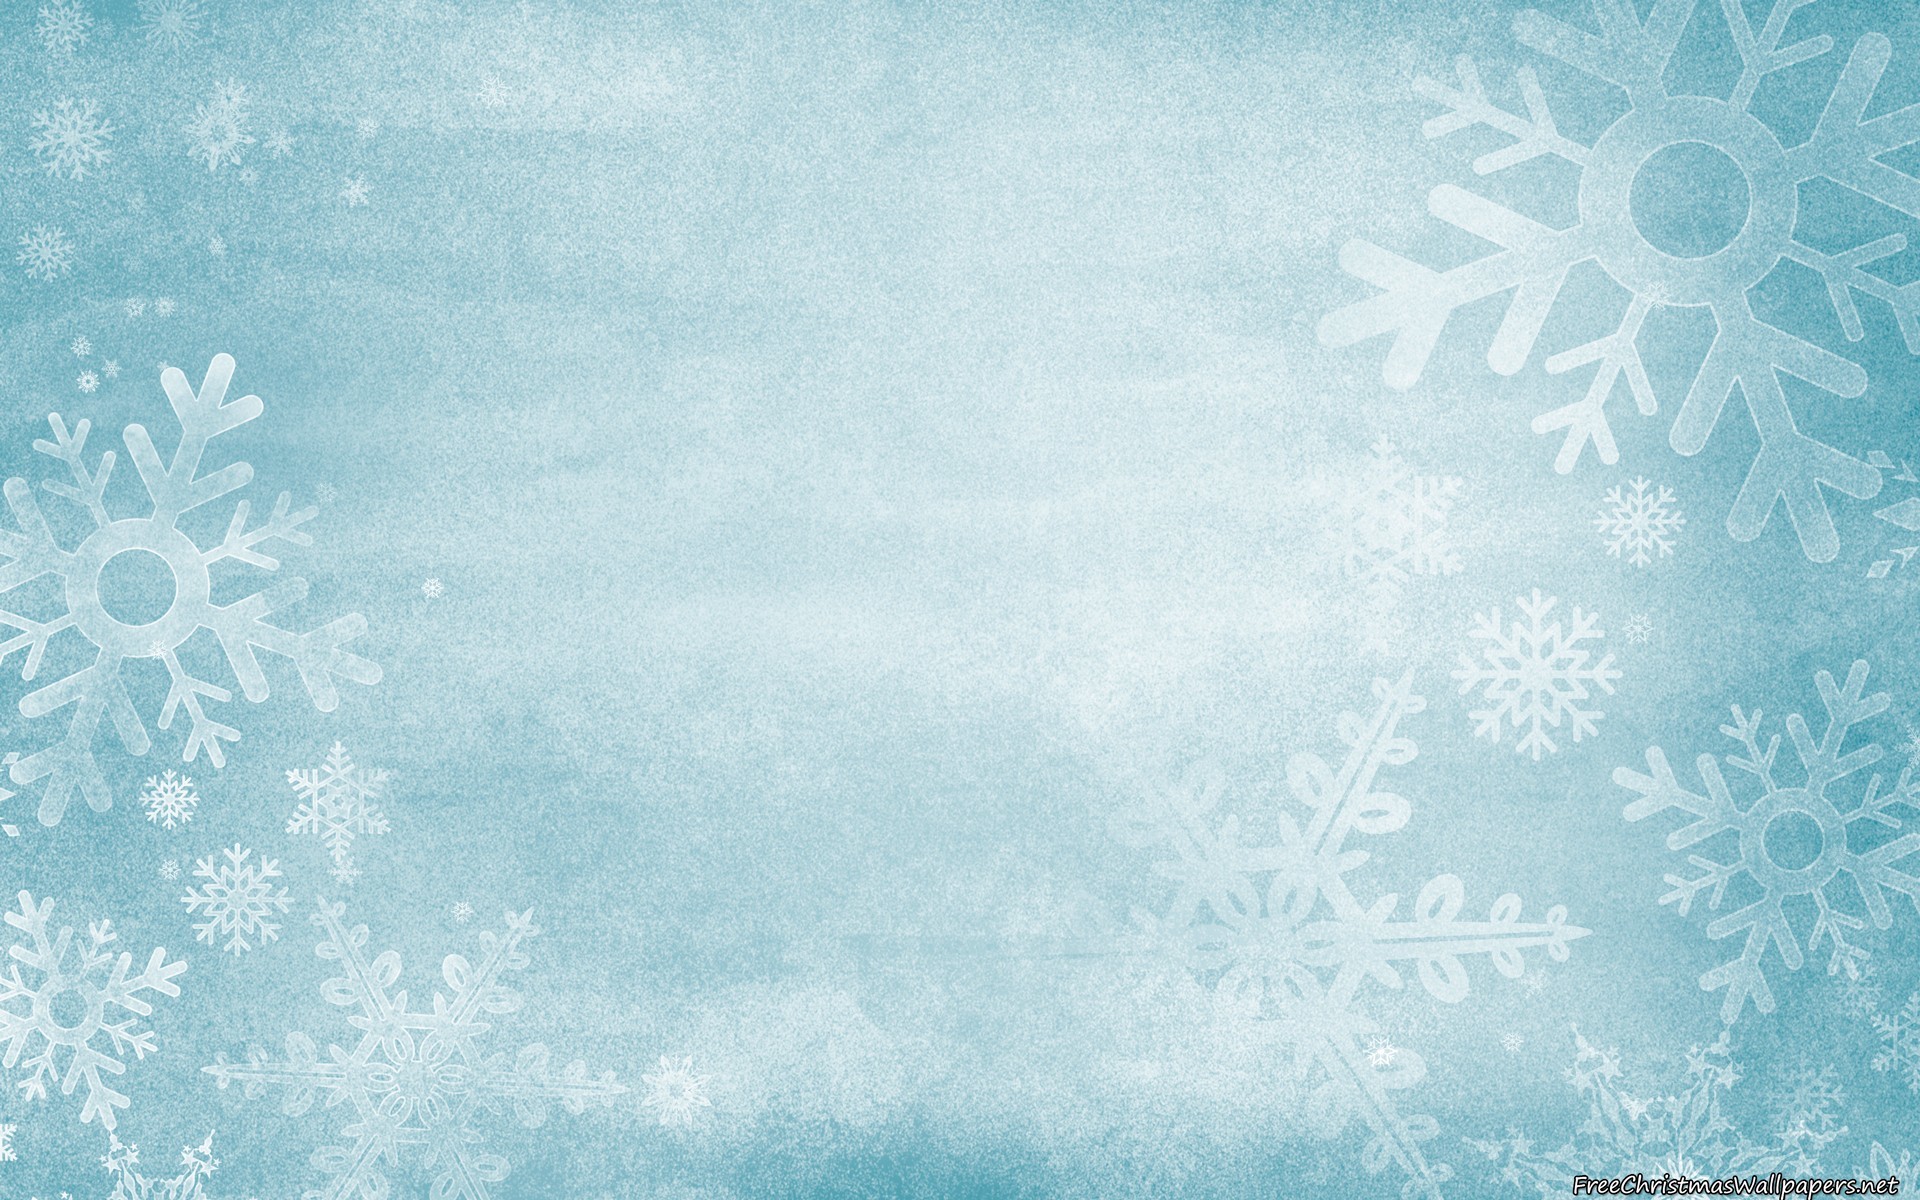 1920x1200 Disney Frozen Christmas Wallpaper : Frozen christmas background wallpaper